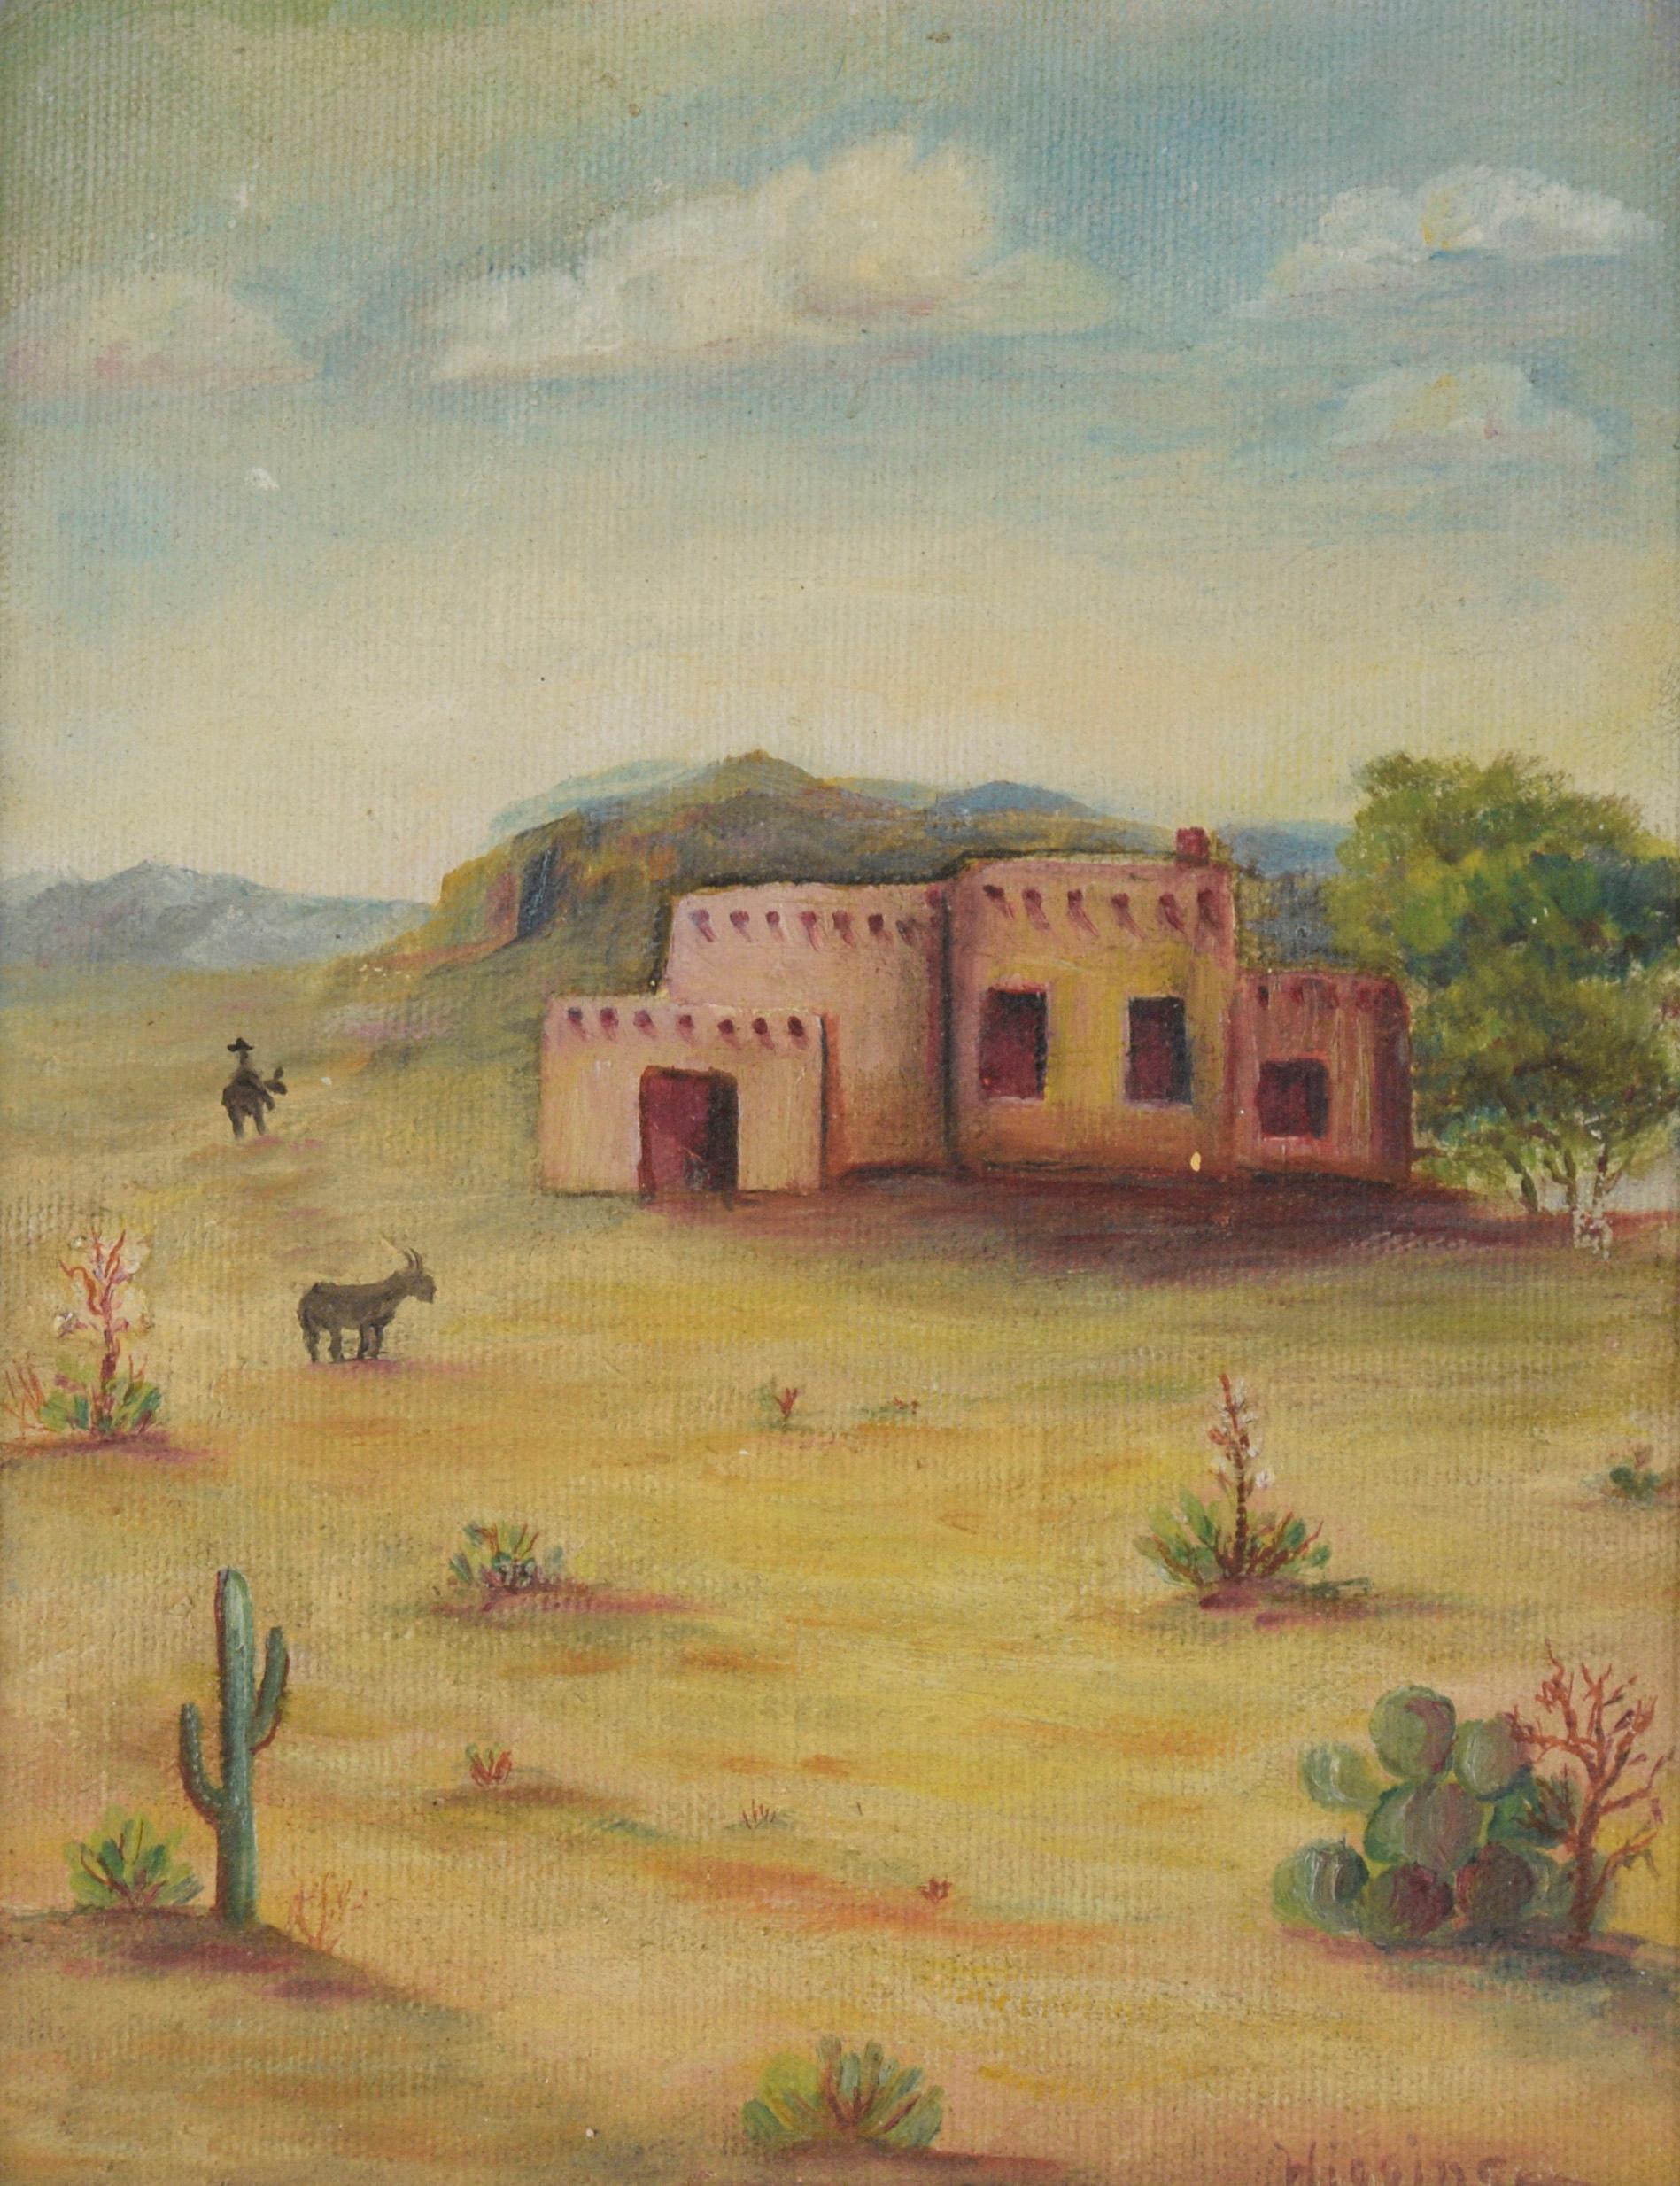 Red Adobe House in the Desert - Painting by Elizabeth Ann Higgins